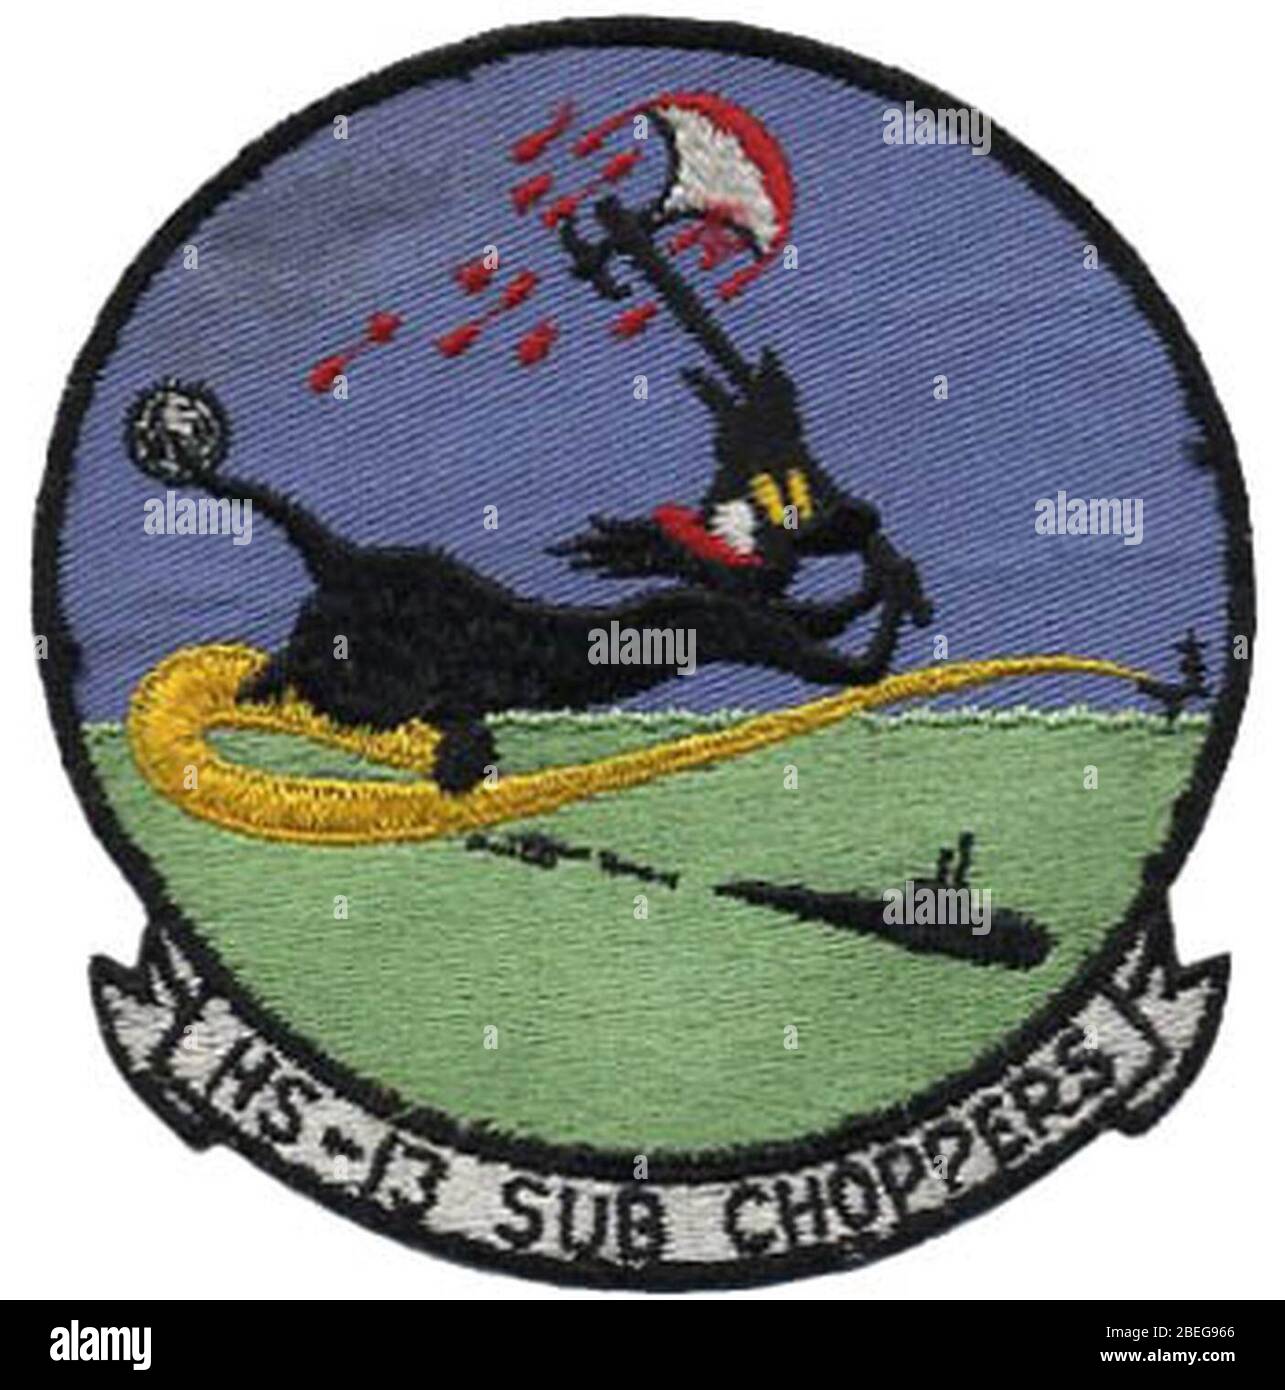 Helicopter Anti-Submarine Squadron 13 (United States Navy - insignia). Stock Photo